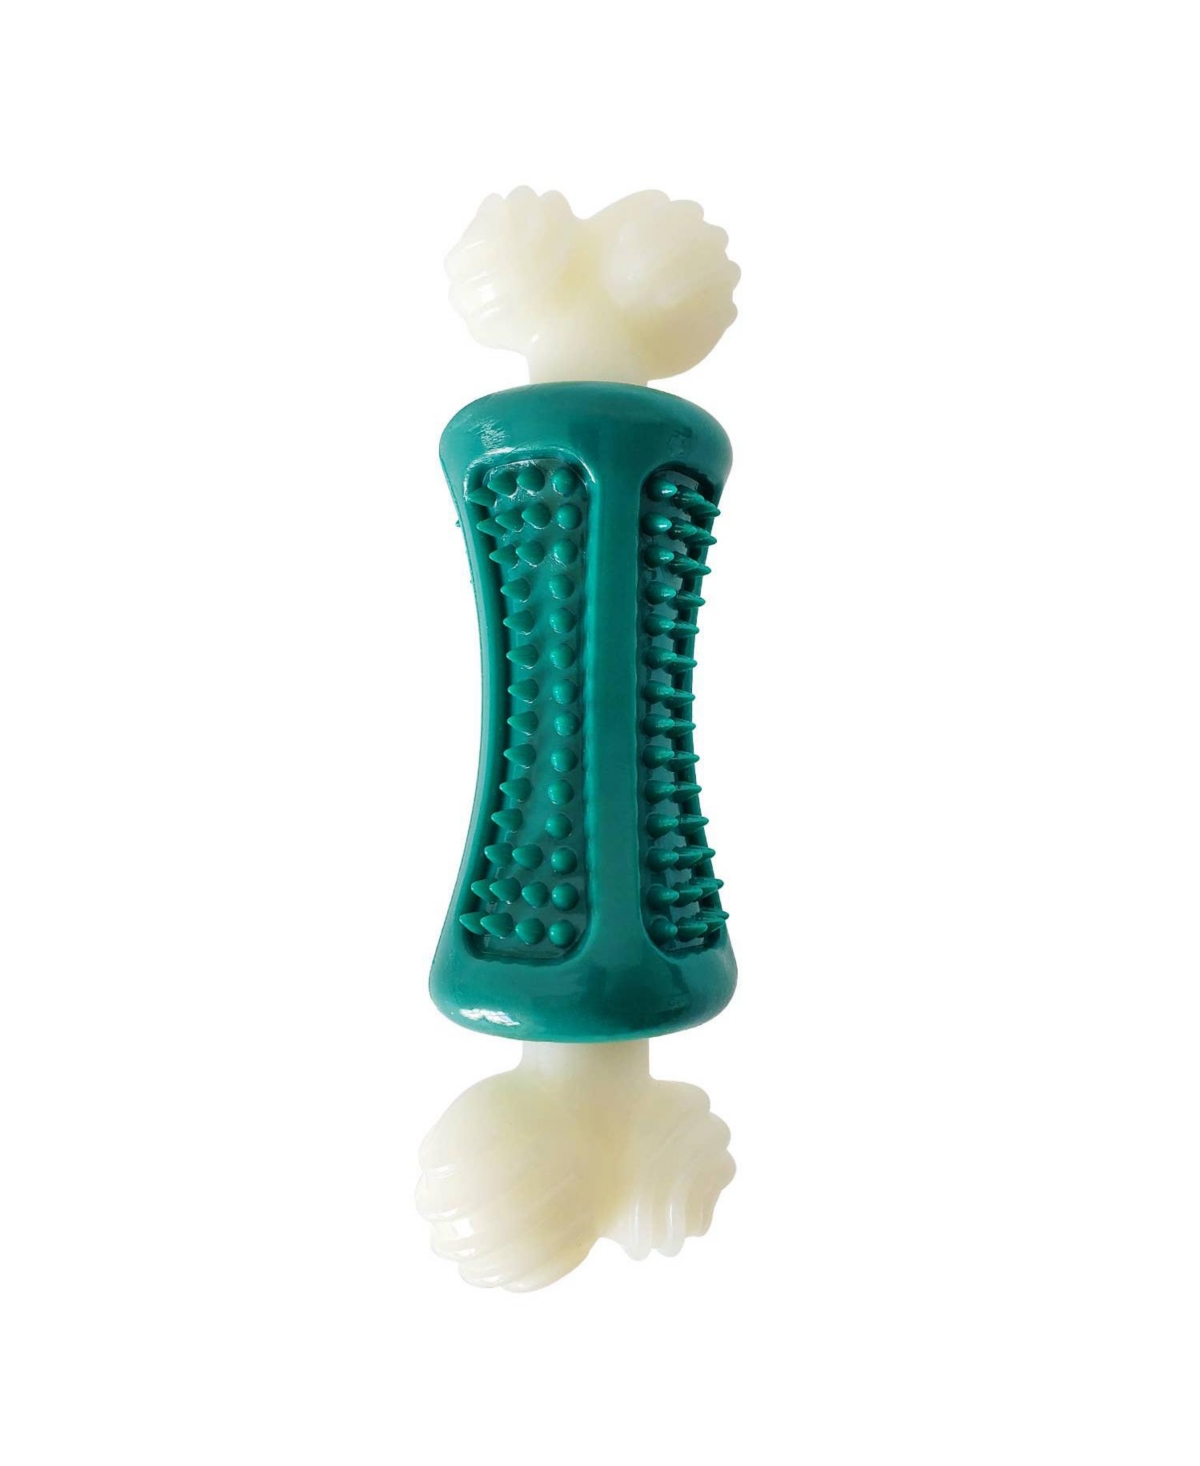 Dental Chew Dog Bone Toy - Engineered for Hard Chewers - Green